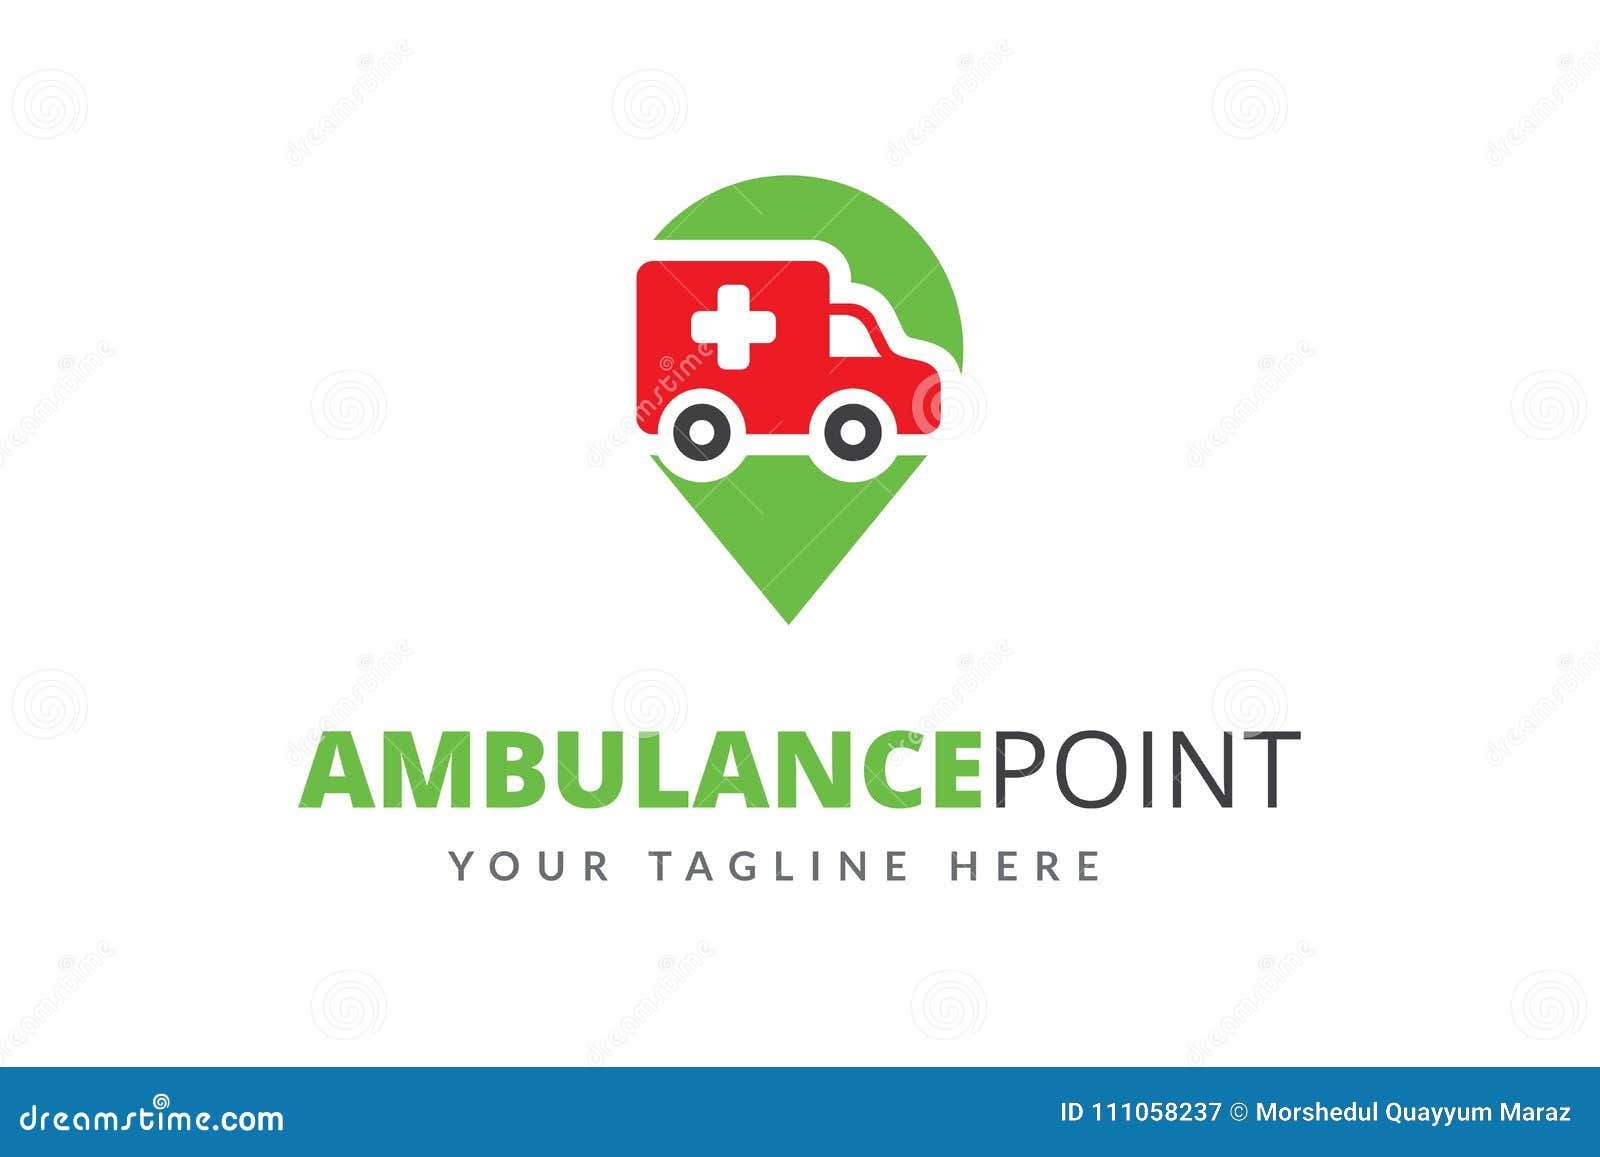 Logo Design Services for Ambulance Service | Logo design services, Logo  design, ? logo